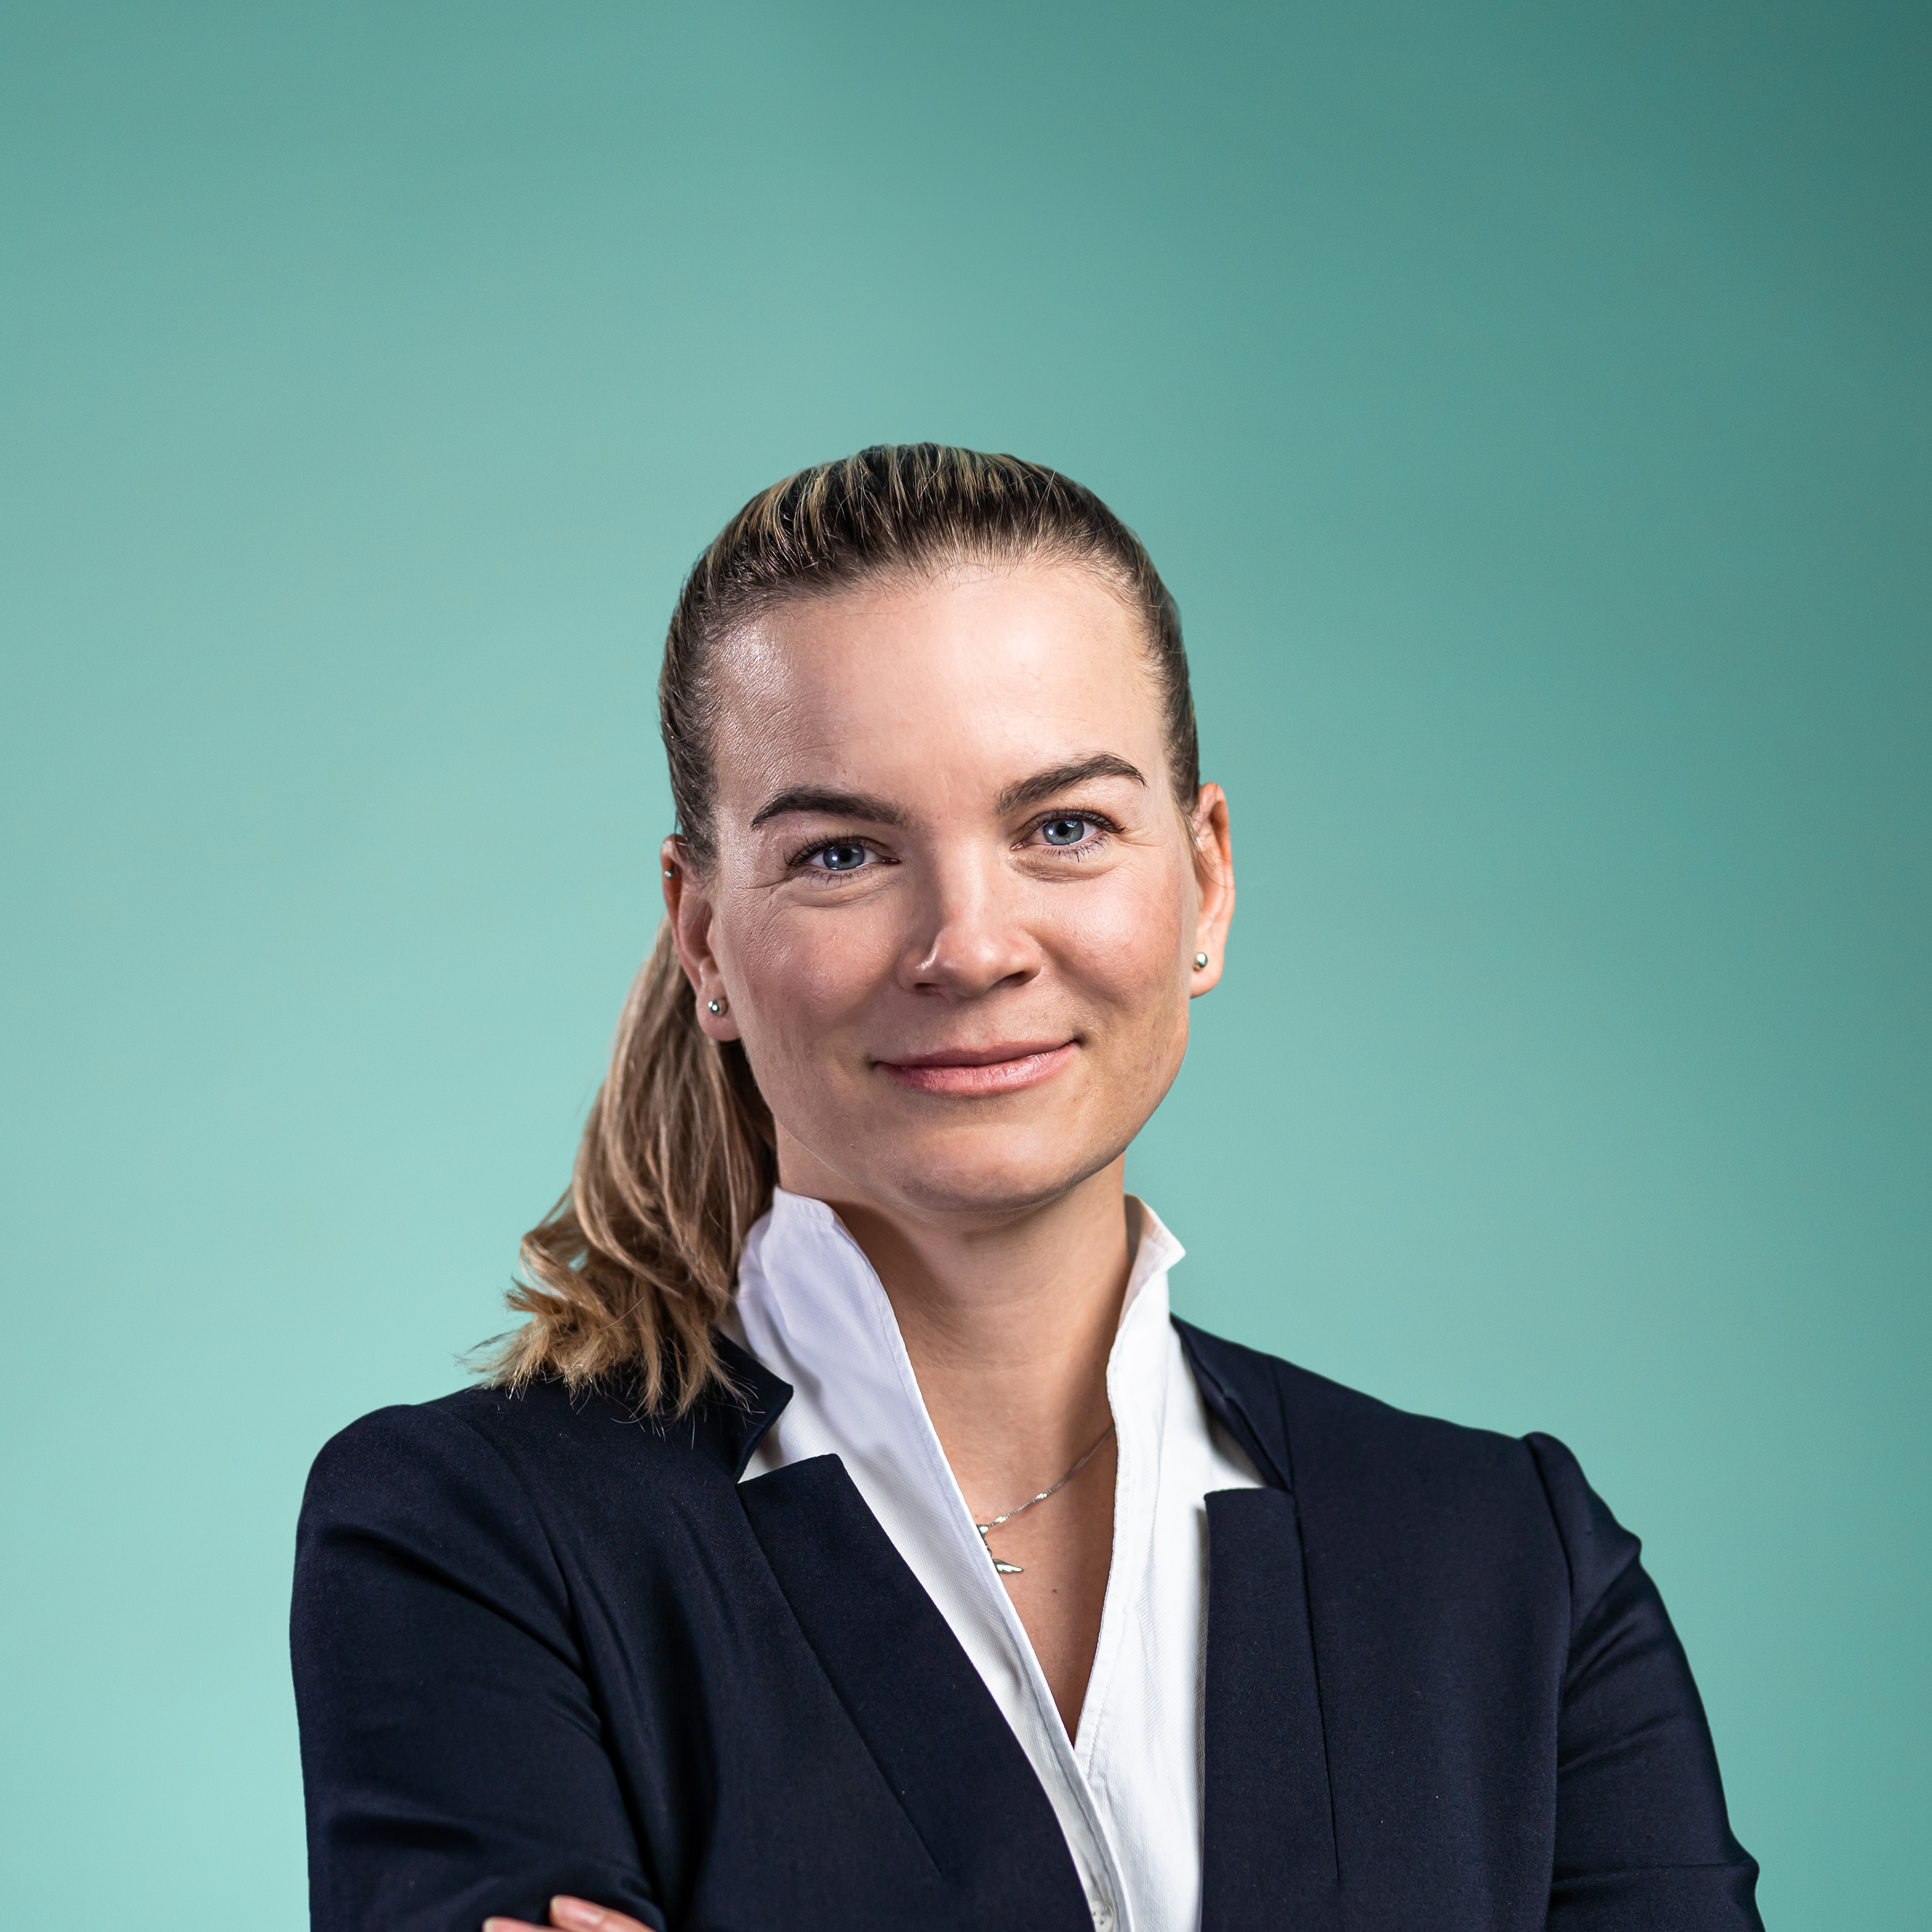 Lucie Mifková – Digital Advertising Director